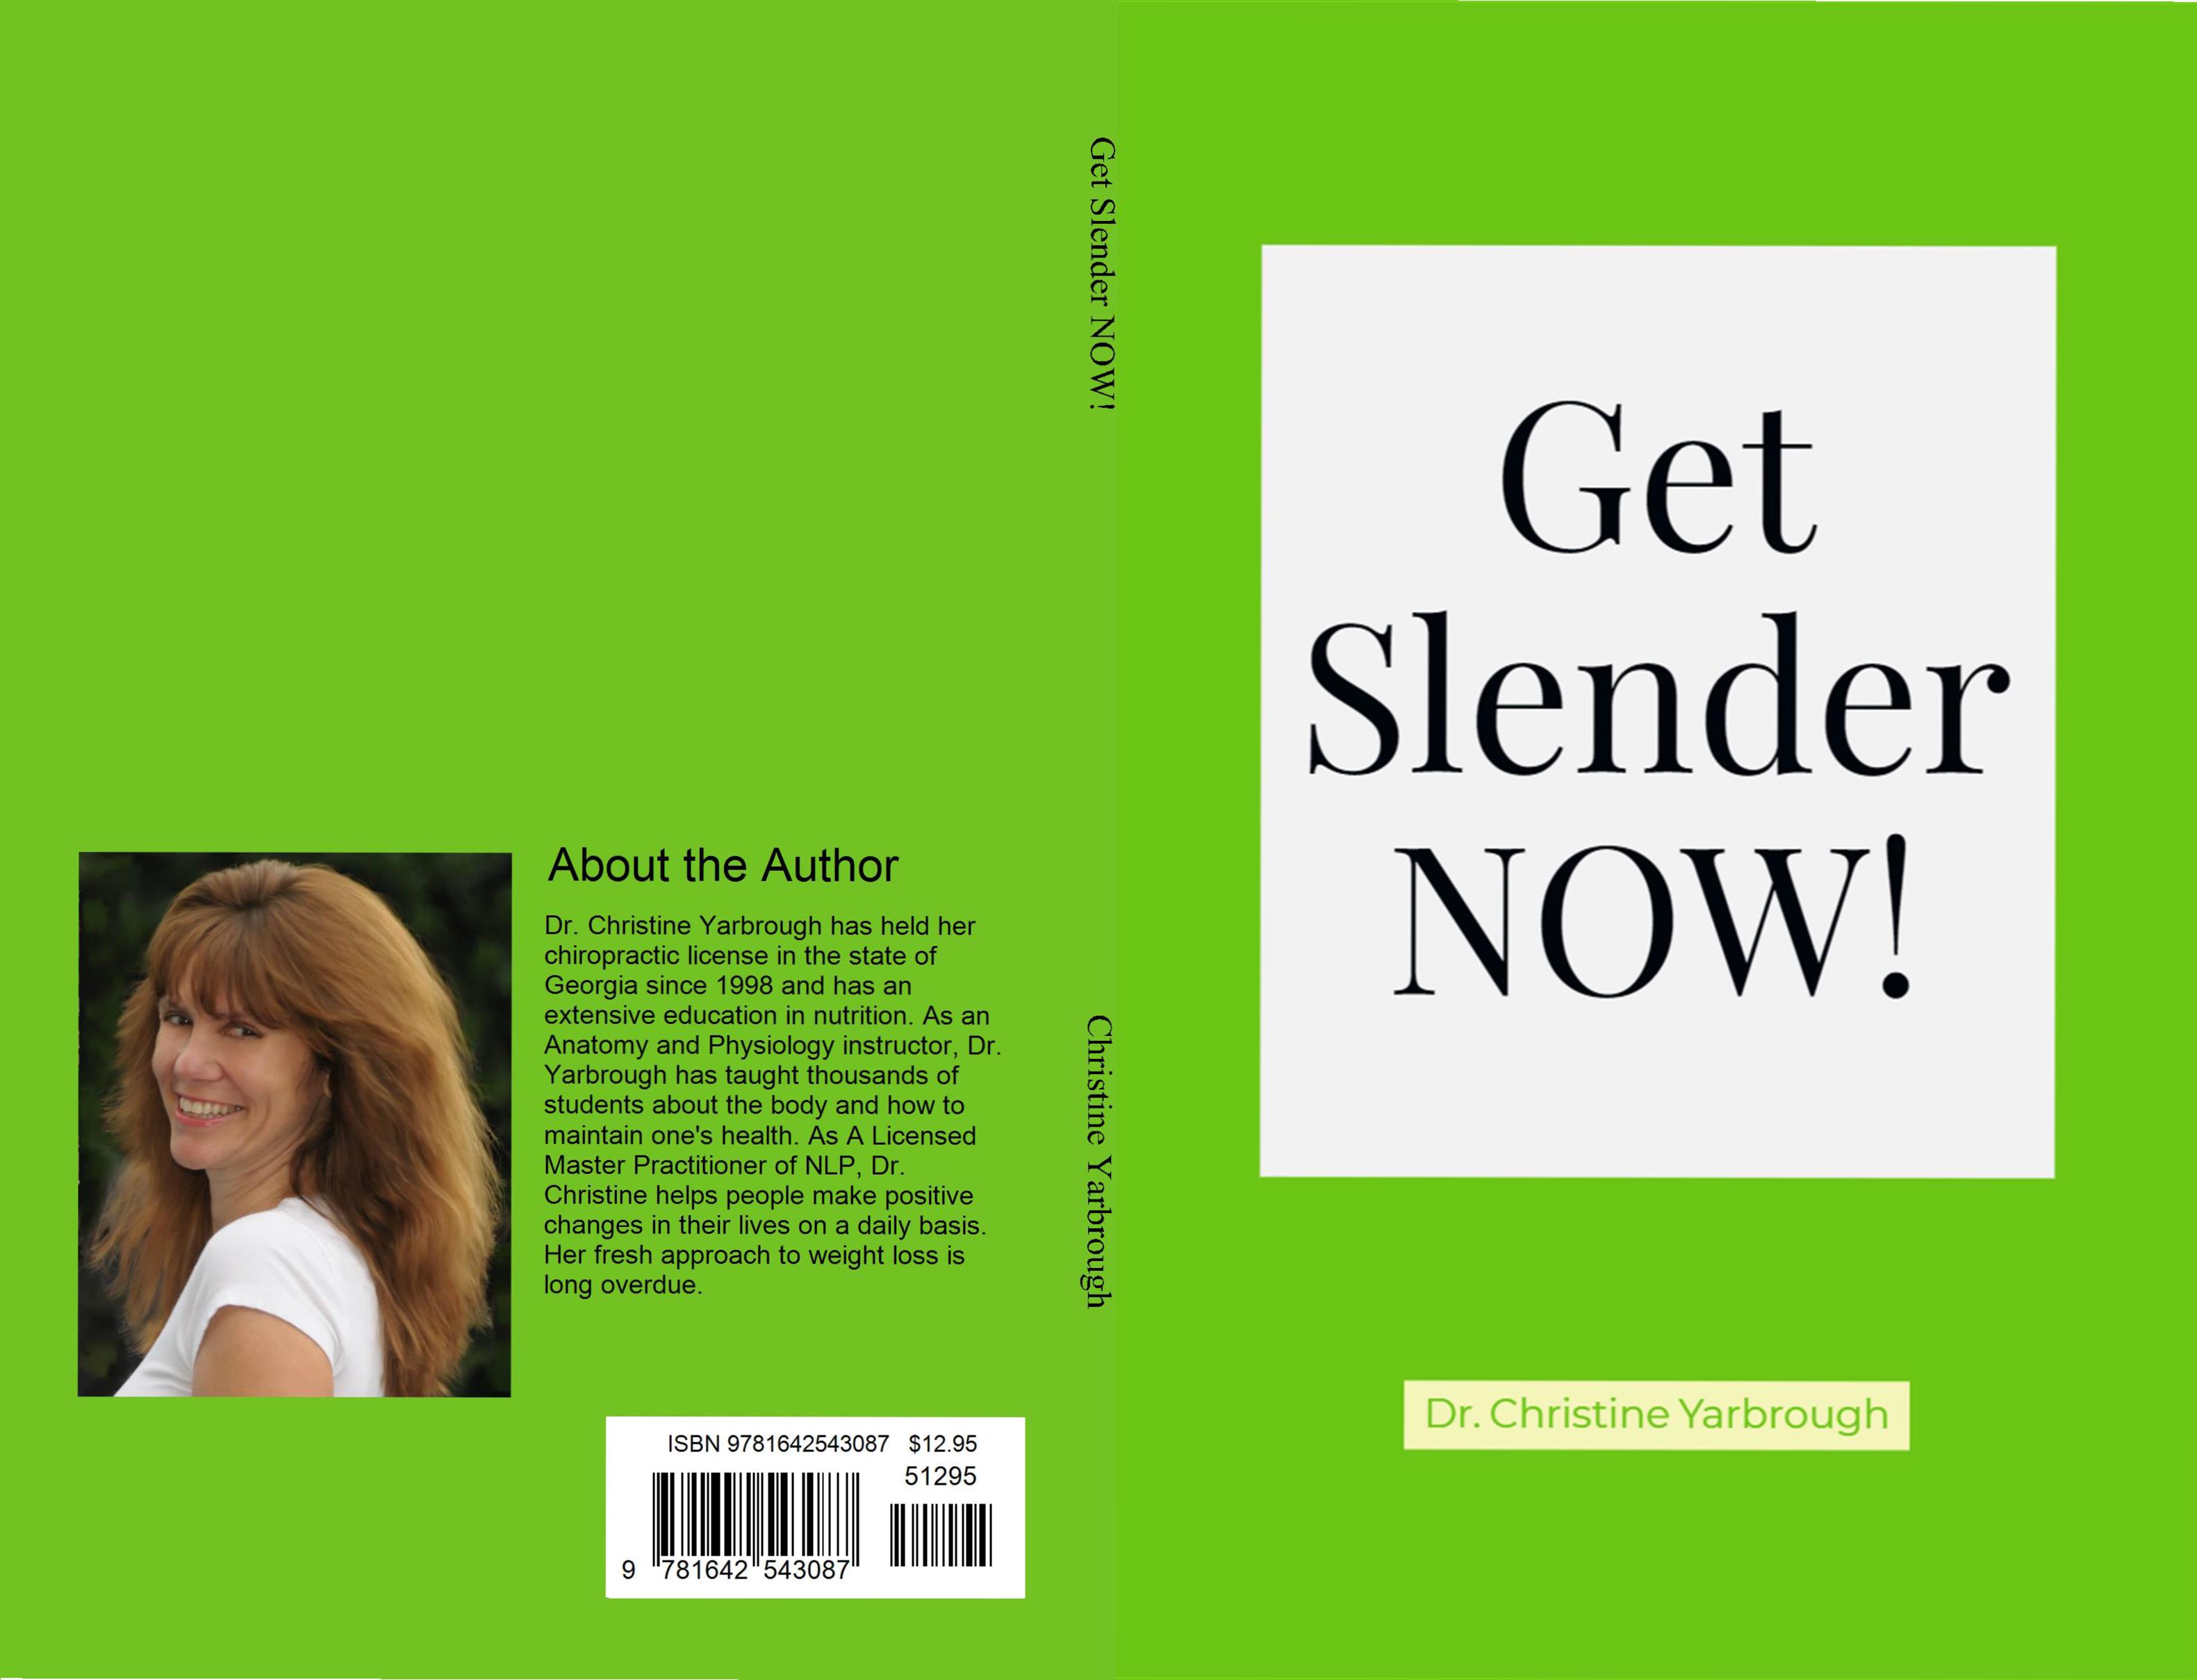 Get Slender NOW! cover image